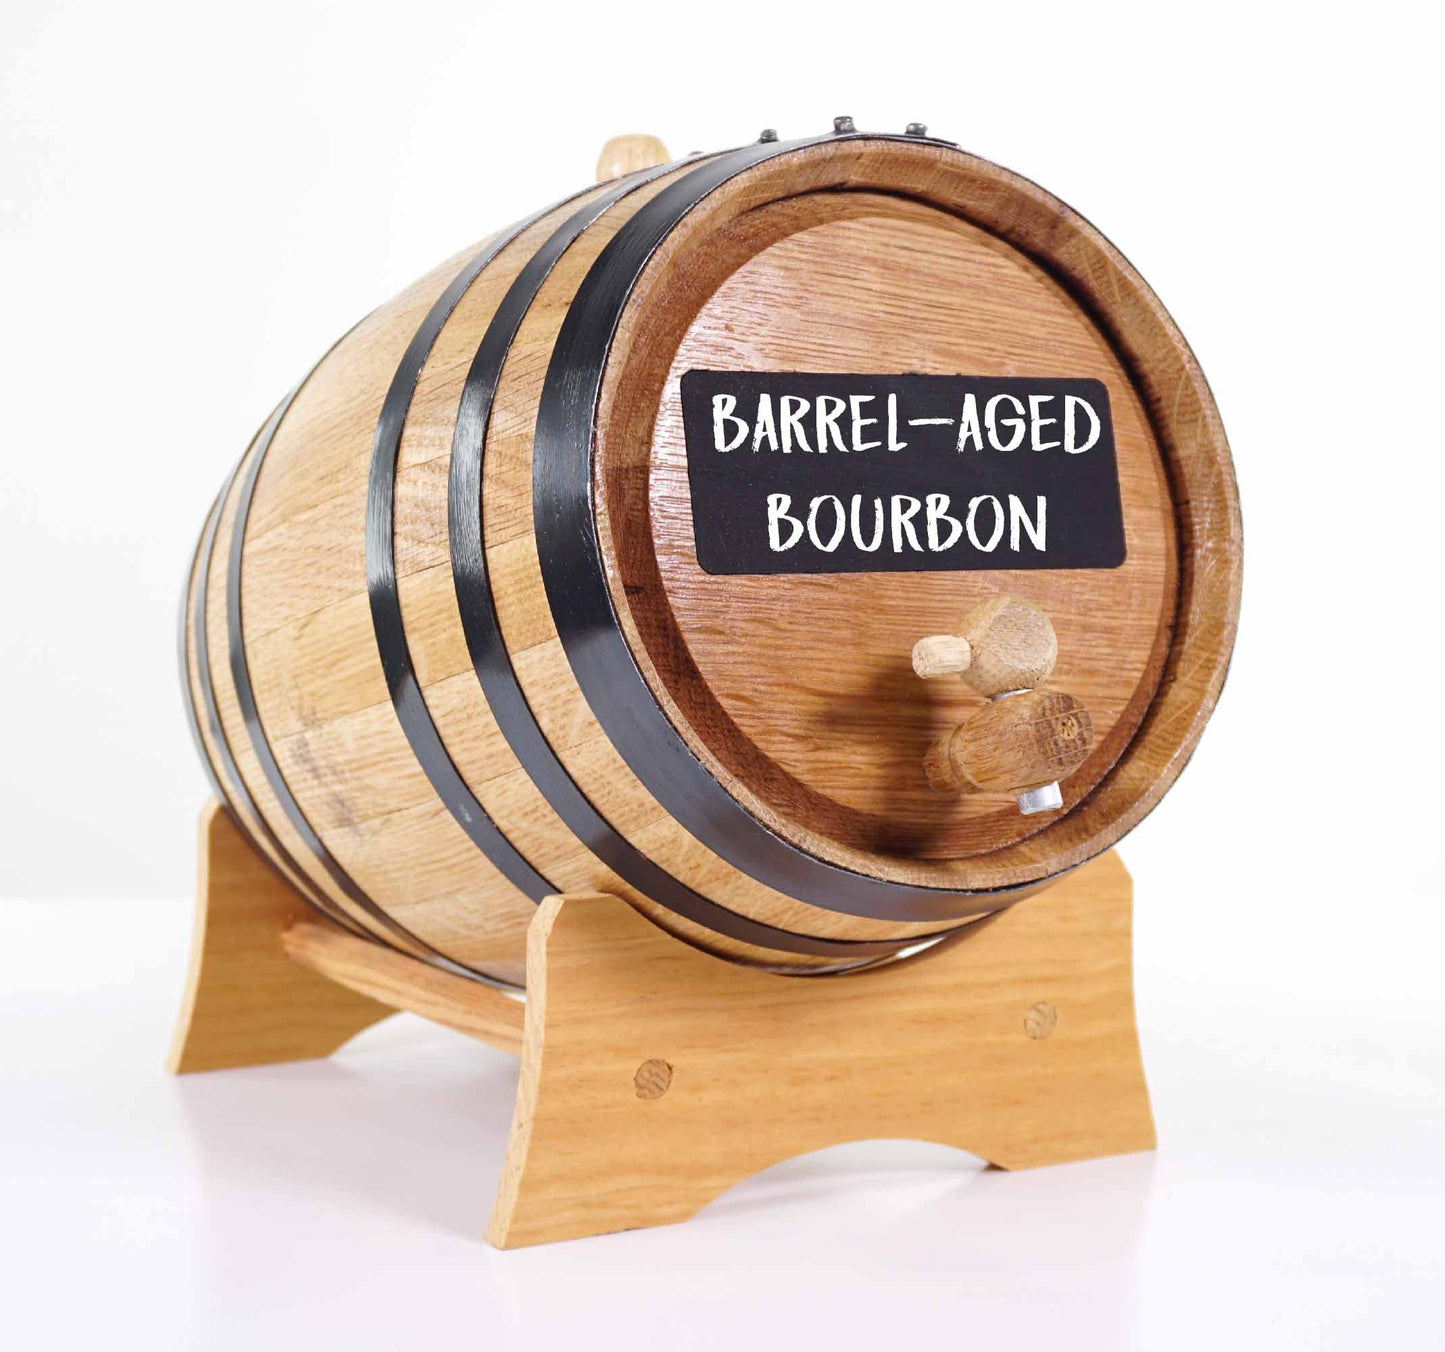 Whiskey Barrel (5 Liter) with Chalkboard Front - Oak Barrel for Aging Whiskey...